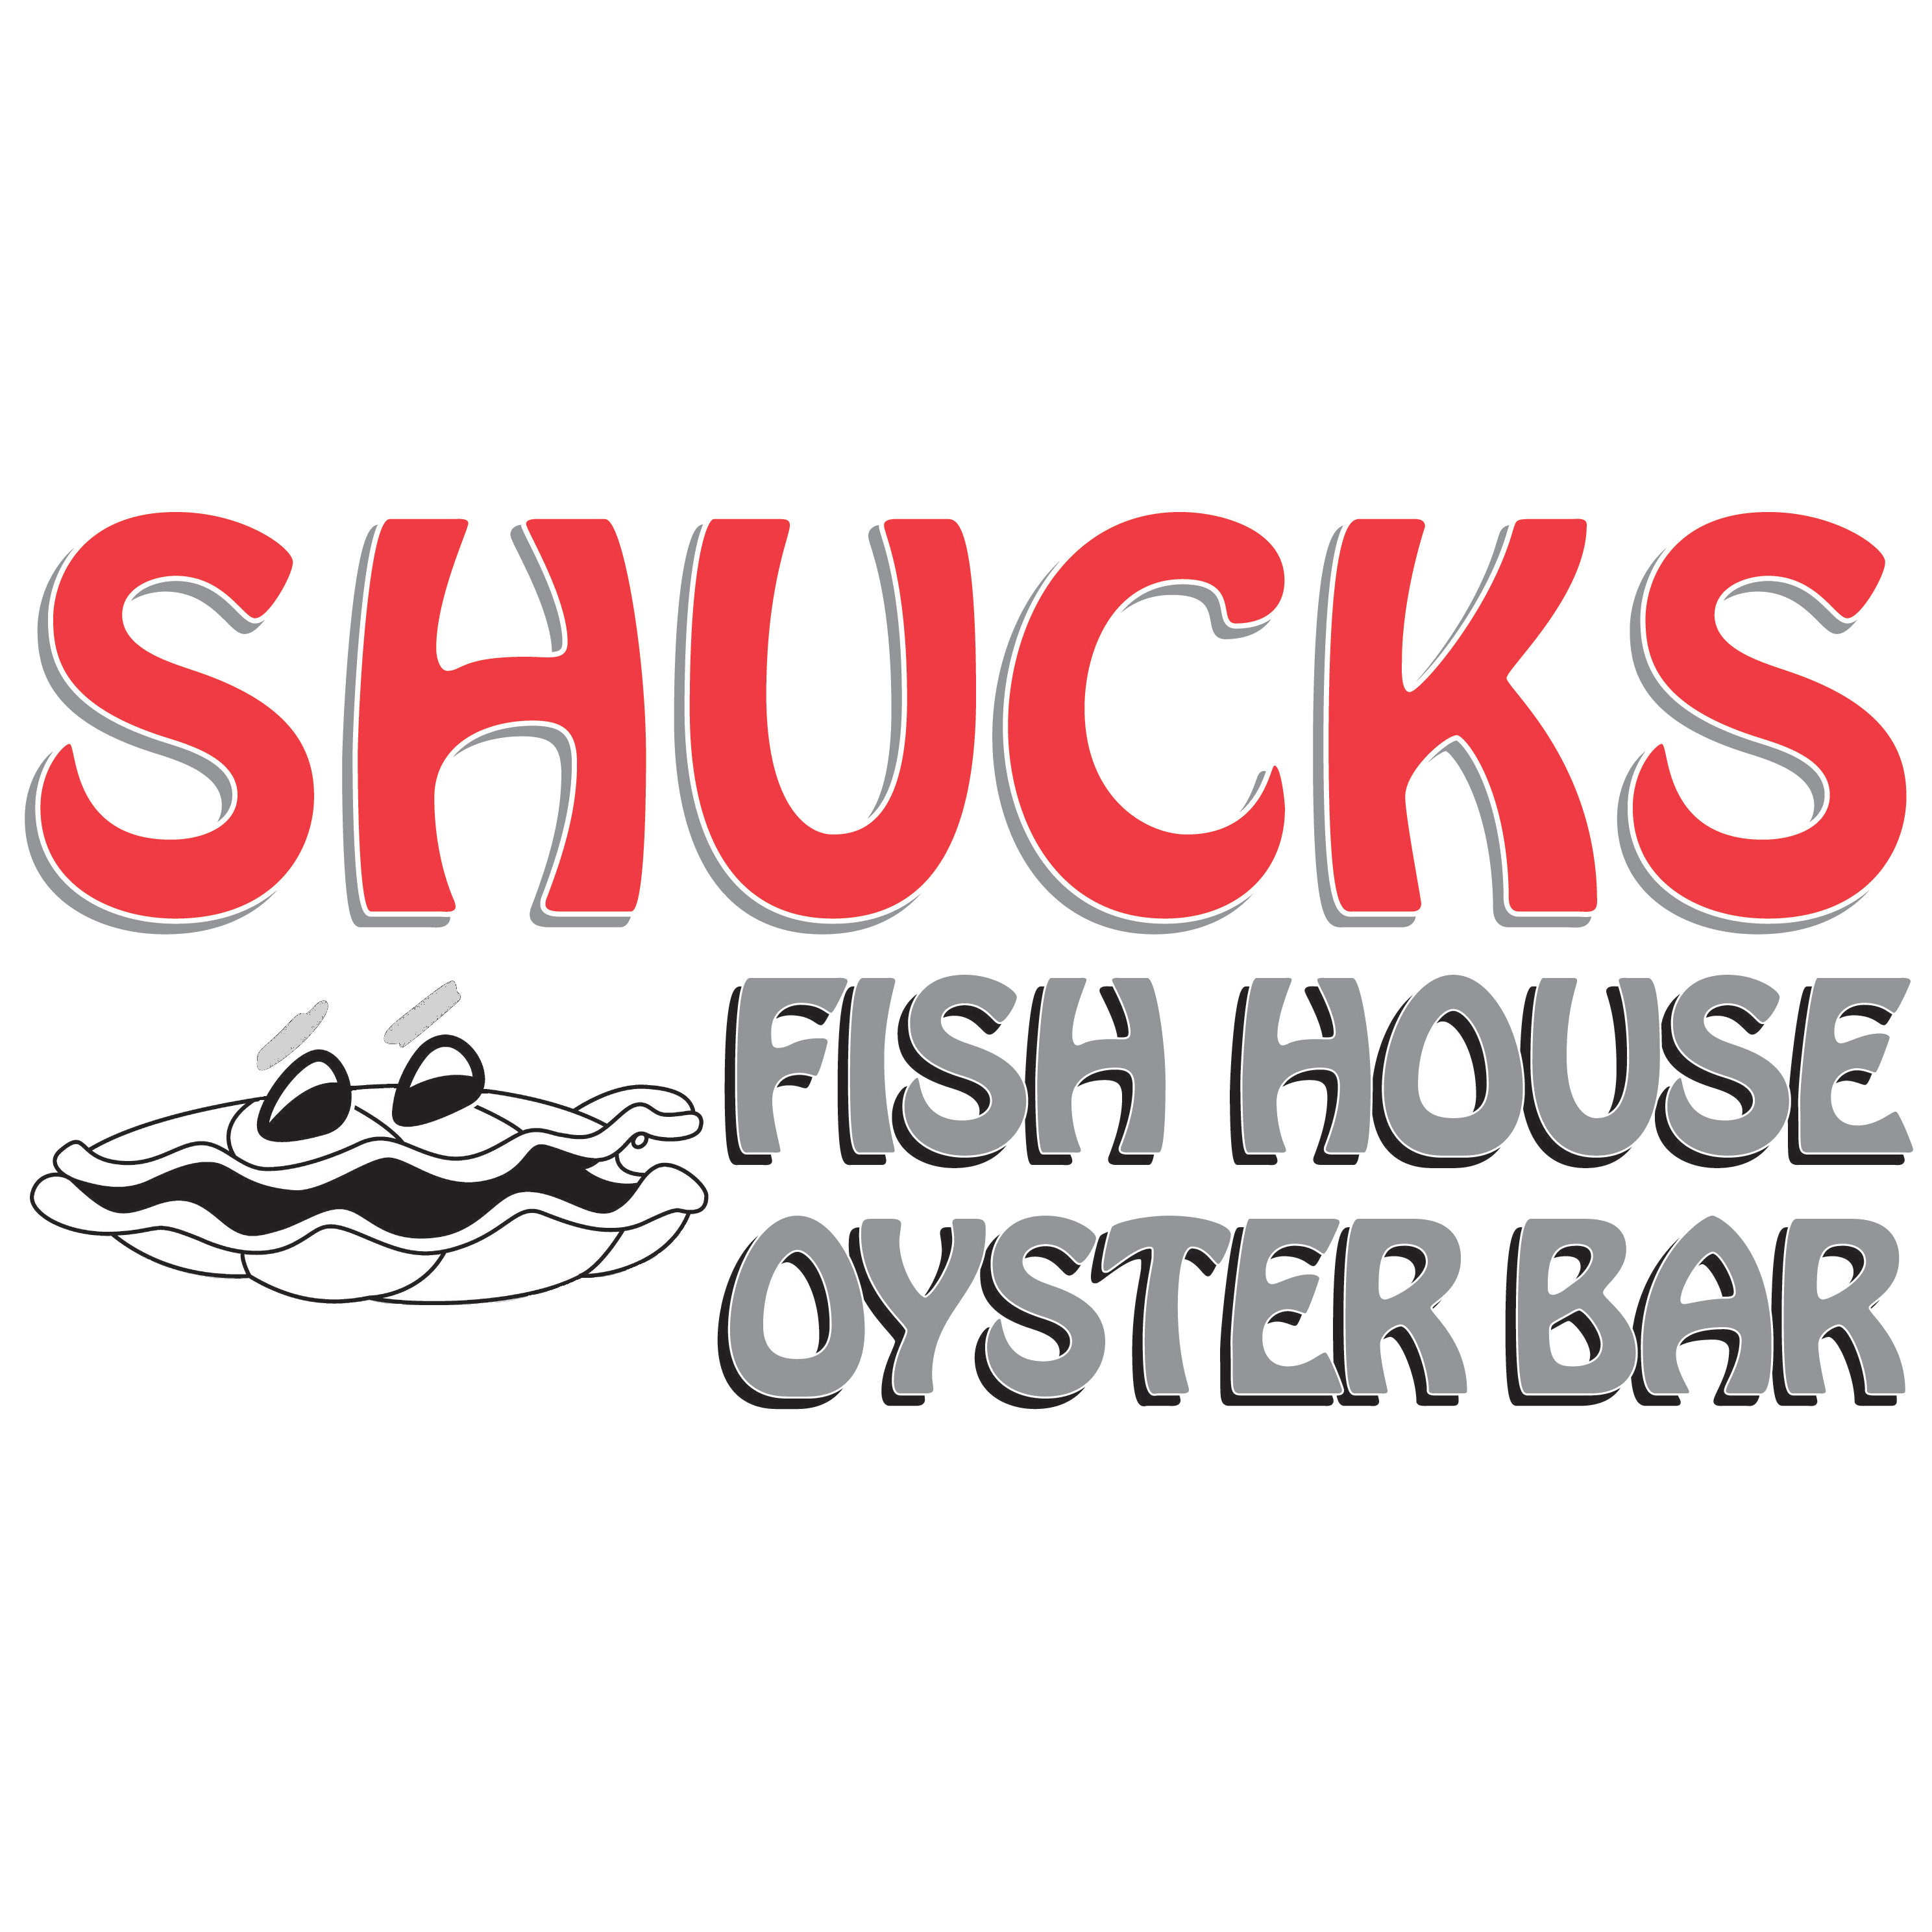 Shucks Fish House & Oyster Bar - Omaha, NE 68102 - (402)614-5544 | ShowMeLocal.com